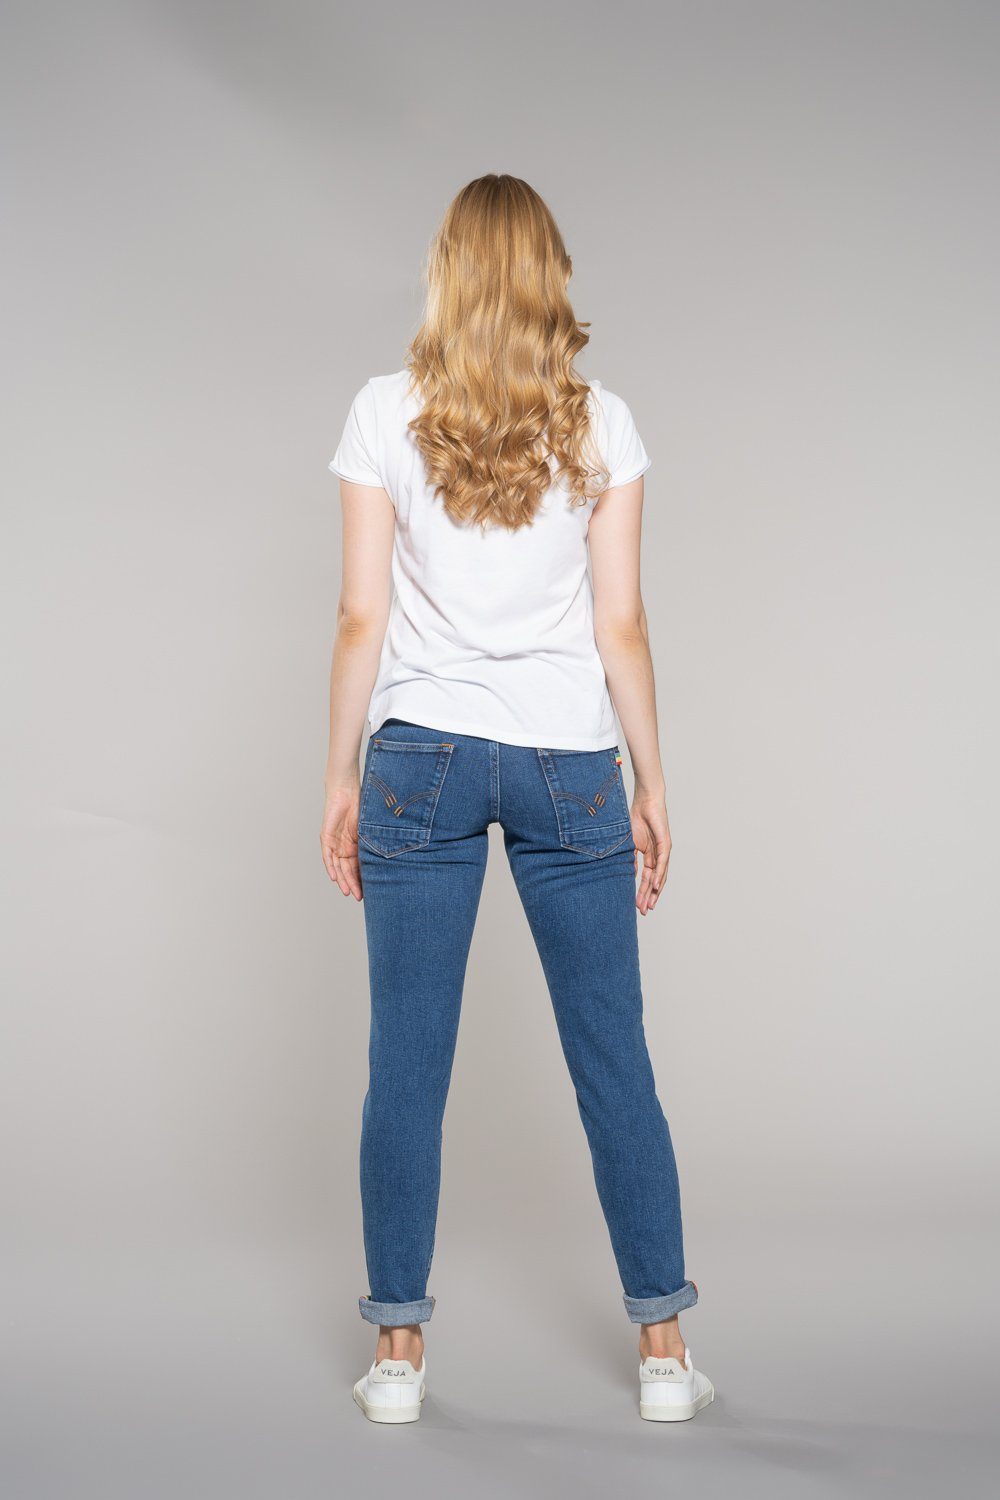 Slim Fashion Waist, Feuervogl Unisex, Fit, Medium Blue Unisex fv-West:minster, Fit, Slim-fit-Jeans 5-Pocket-Style, Waist Medium Slim